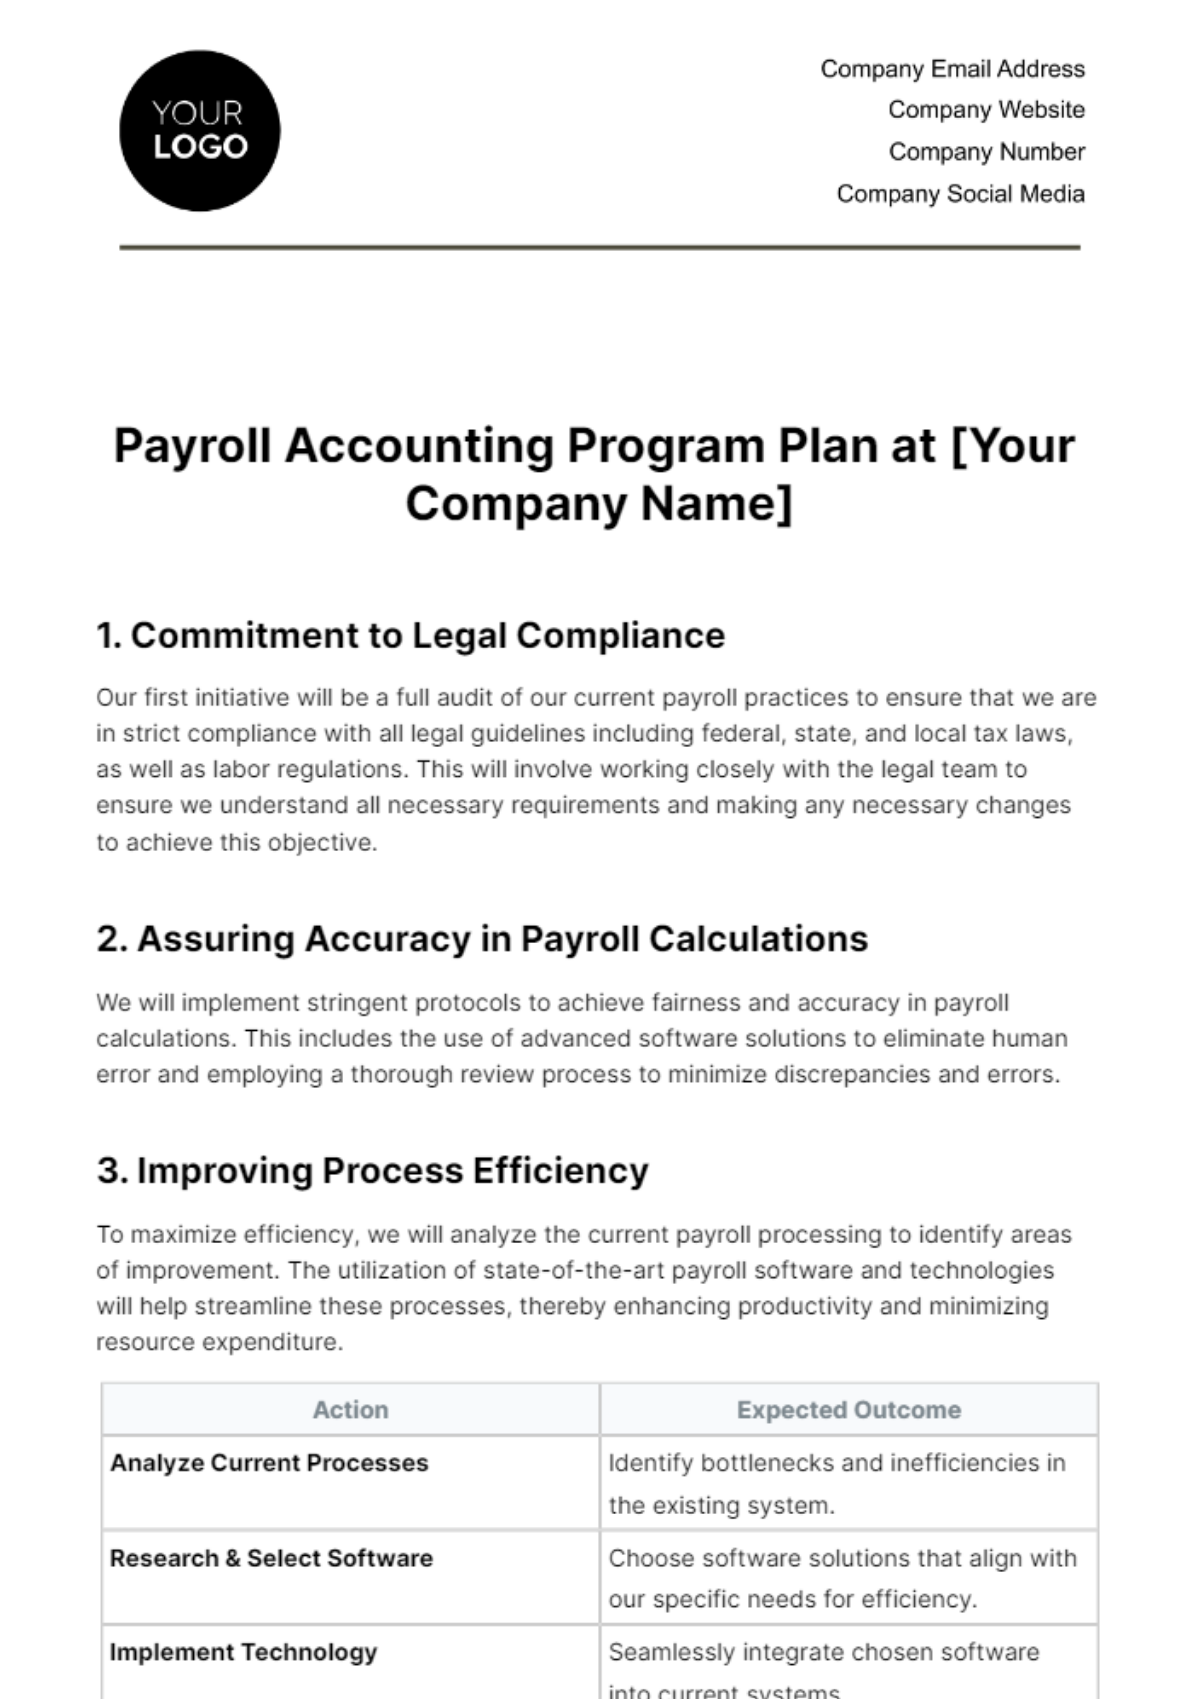 Free Payroll Accounting Program Plan Template